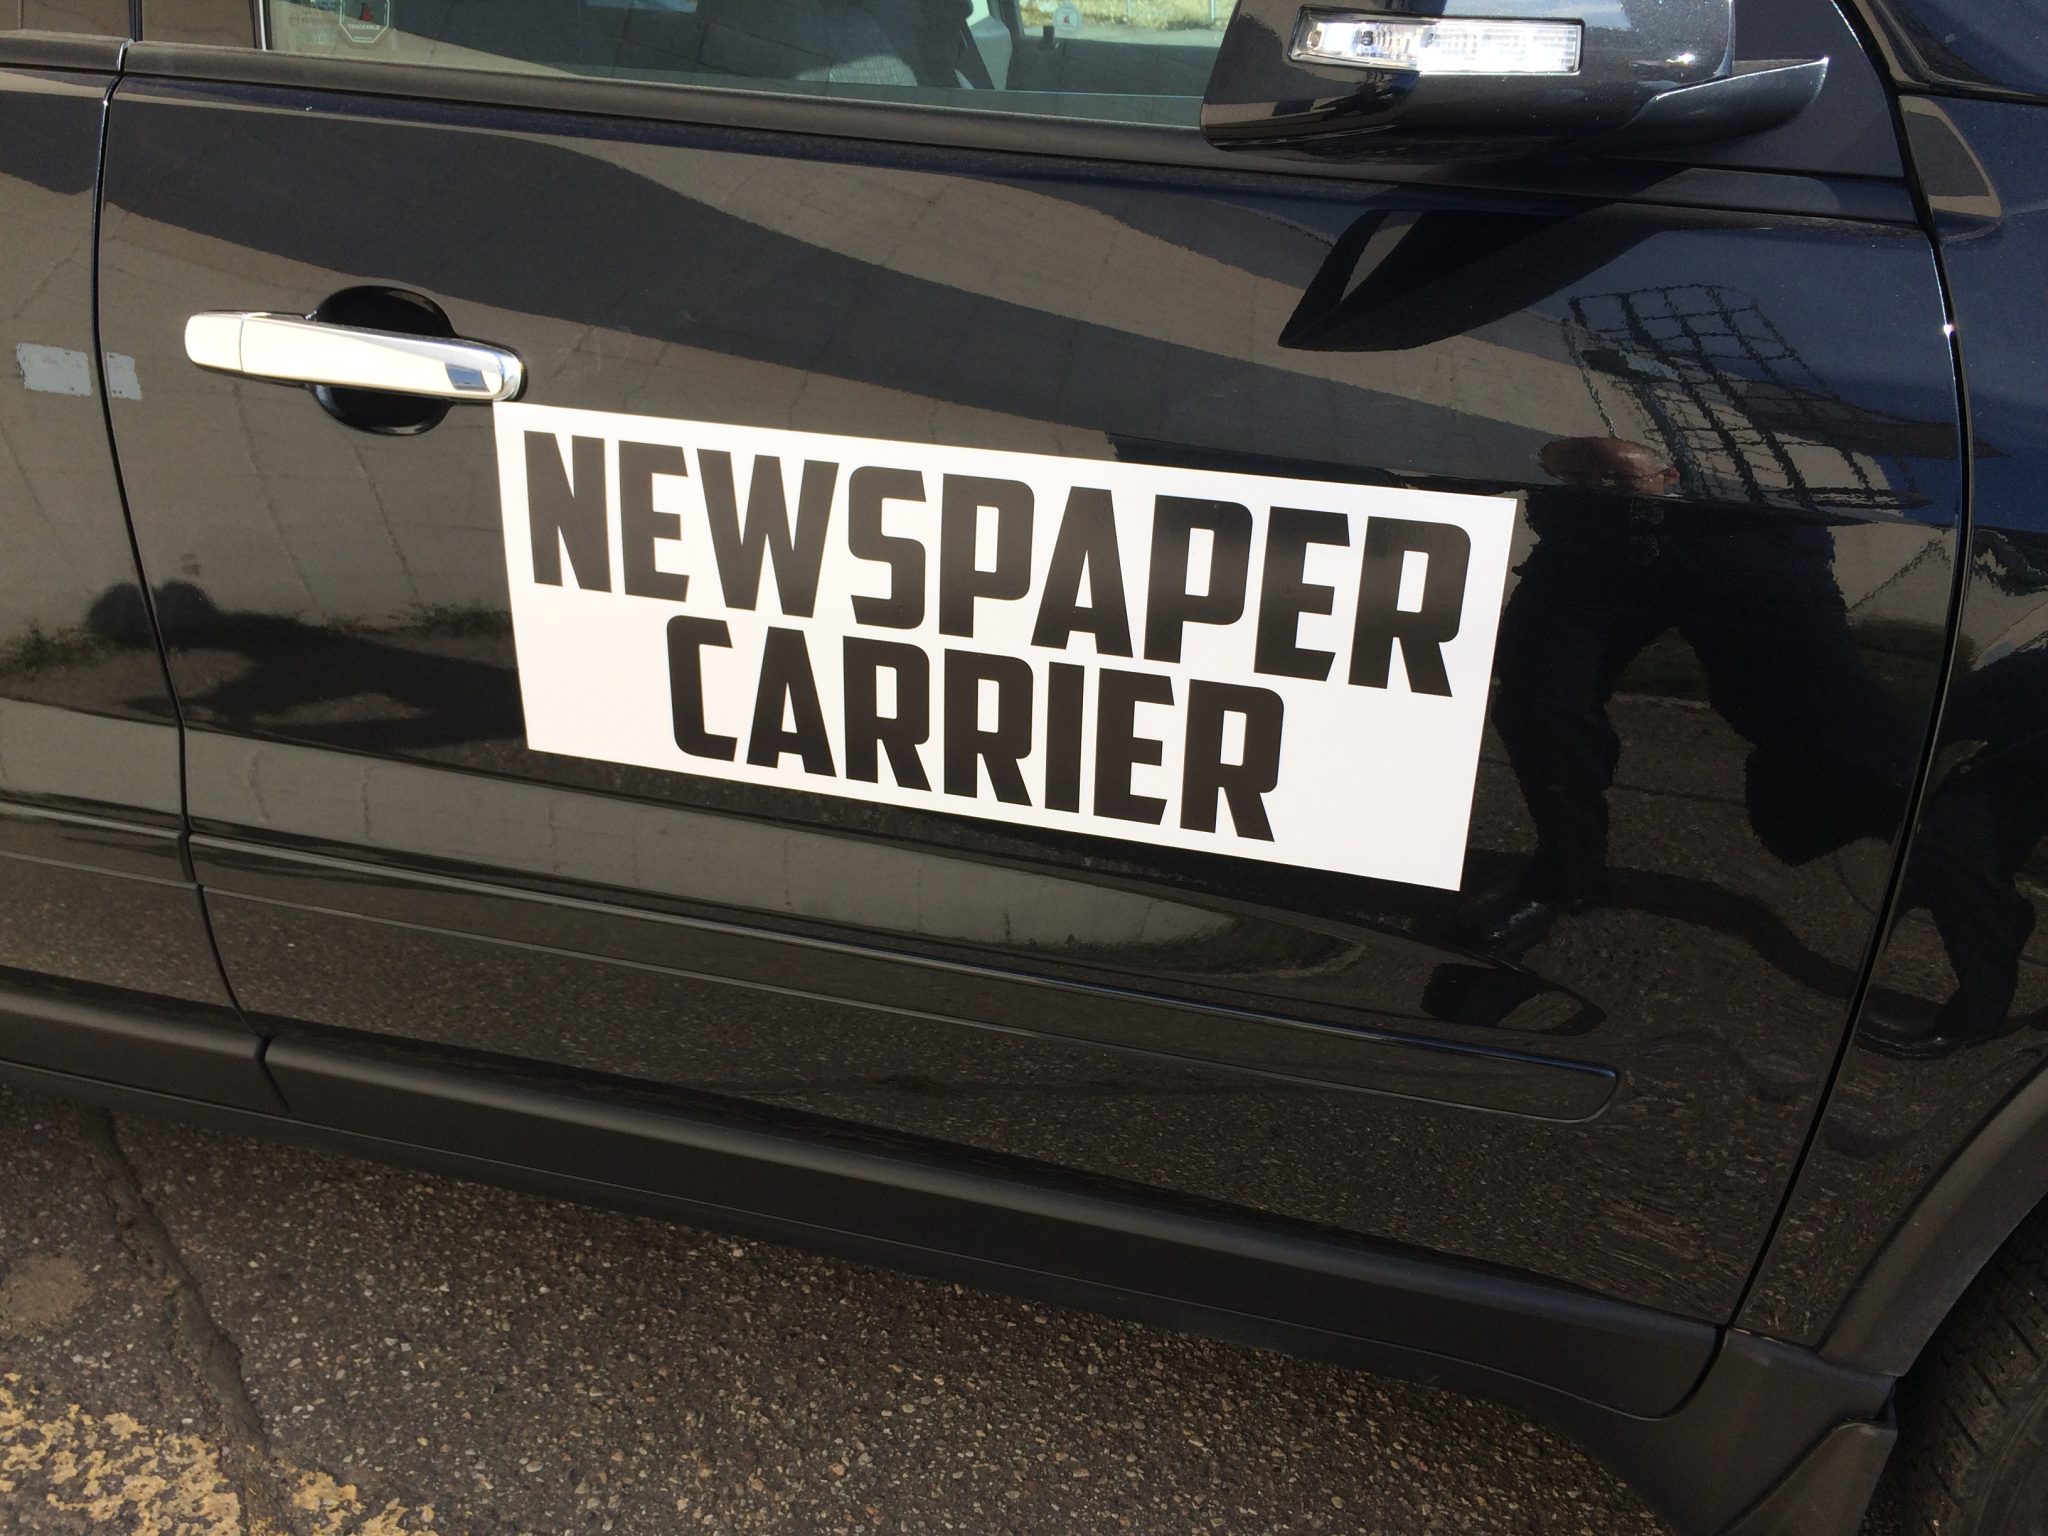 Magnetic Car Sign for Newspaper carrier in Warner Robins, GA